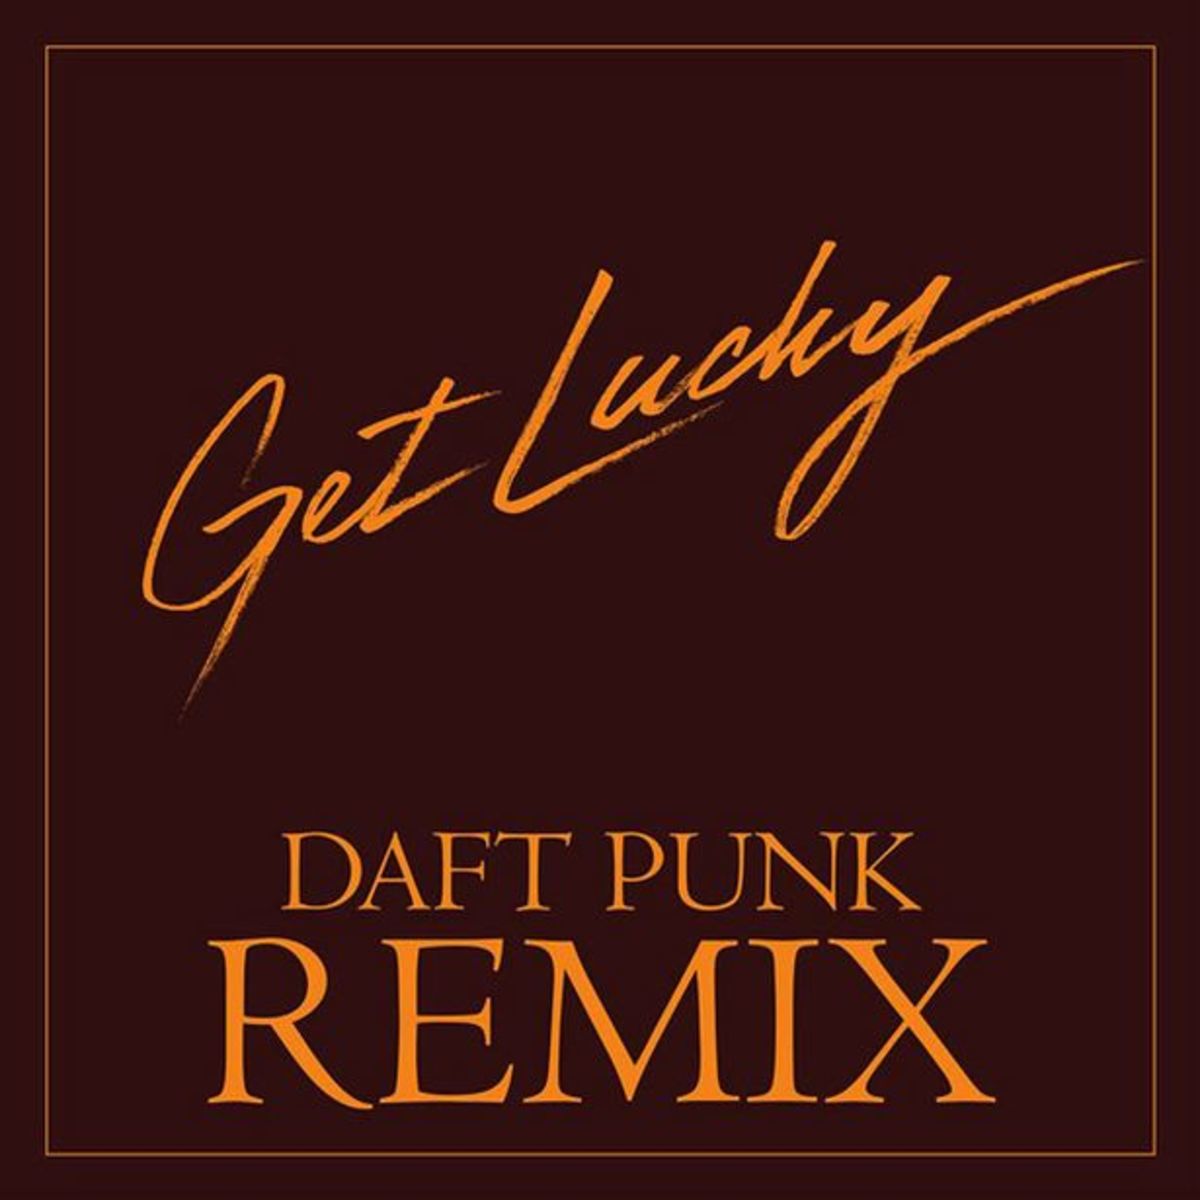 EDM News: Daft Punk Releases 10 Min. "Get Lucky" Remix On Spotify, Vinyl